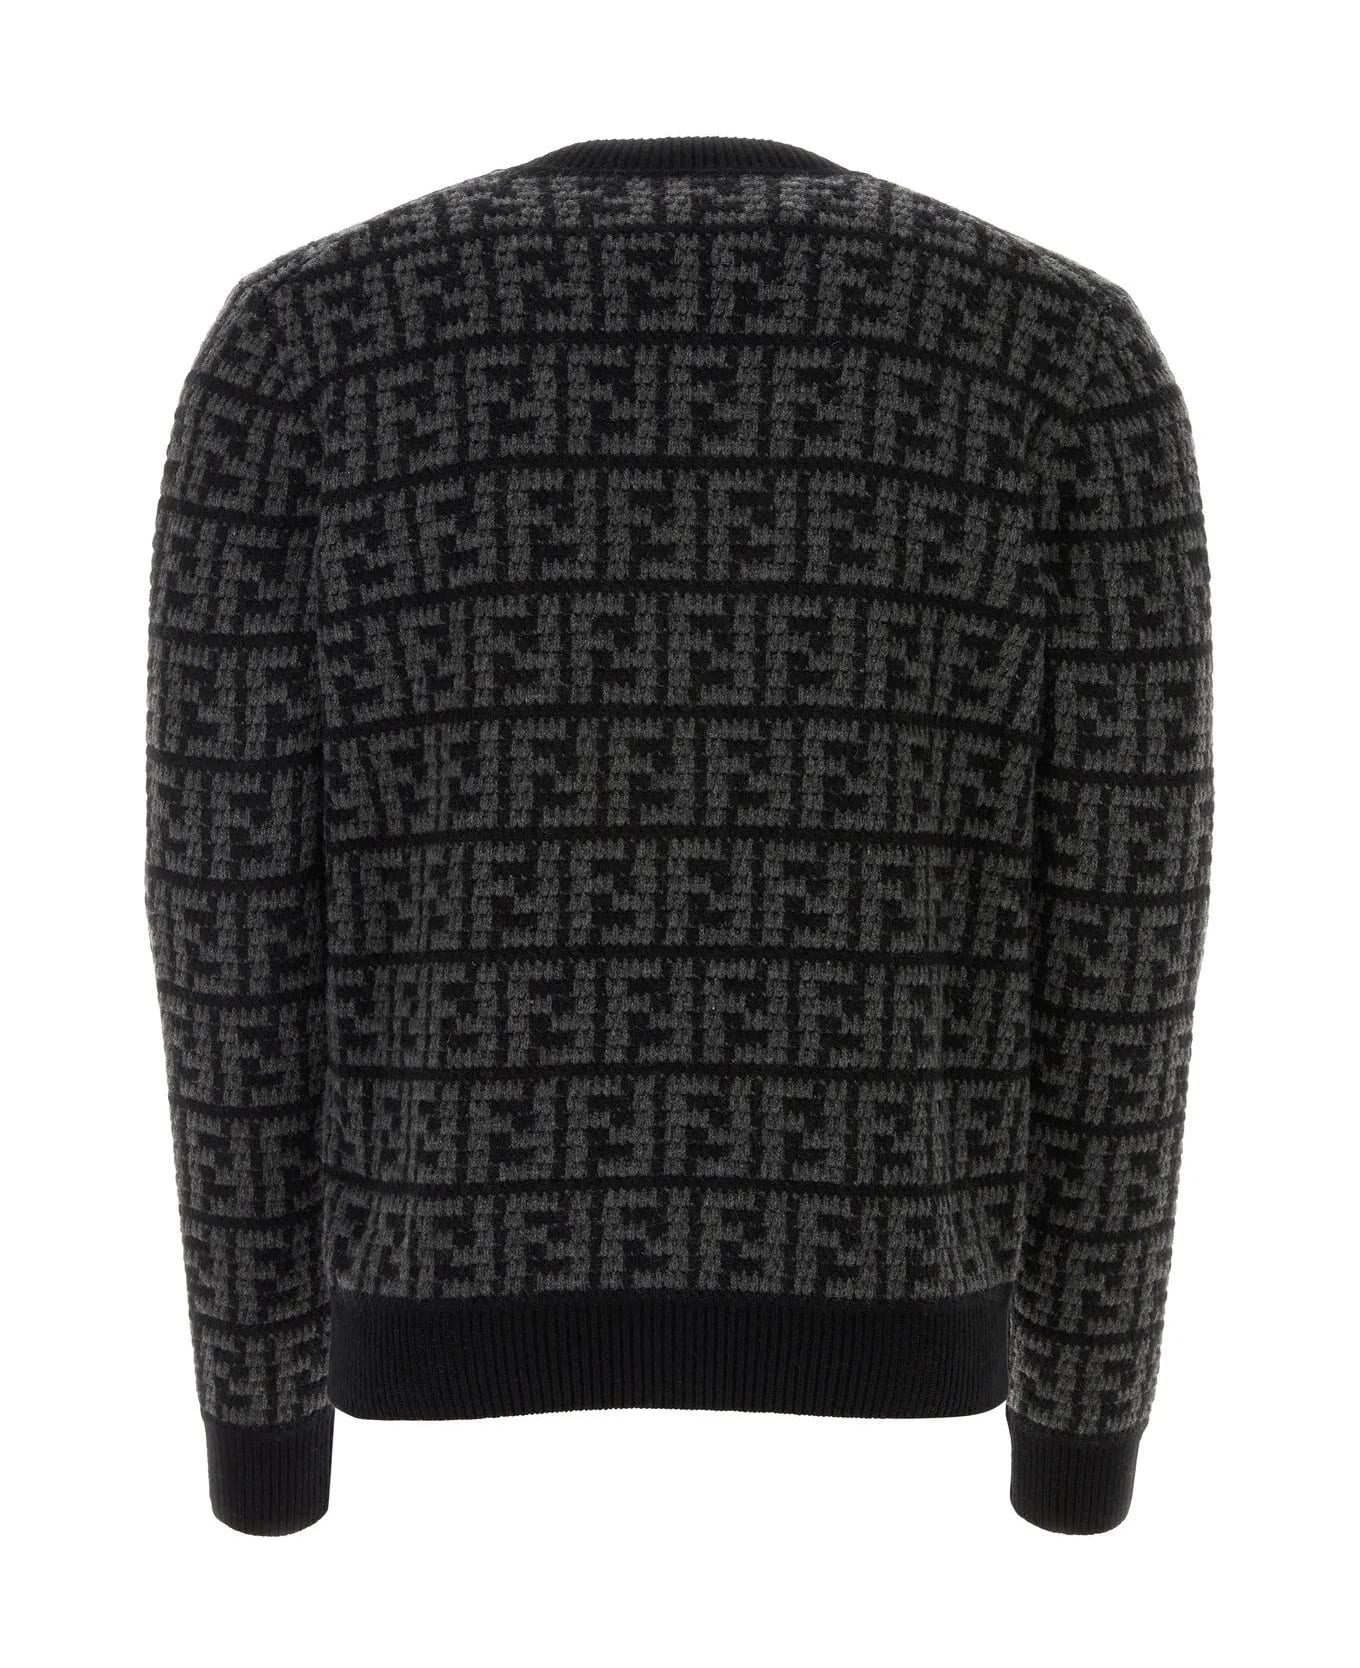 Fendi Embroidered Cashmere Cardigan - Black